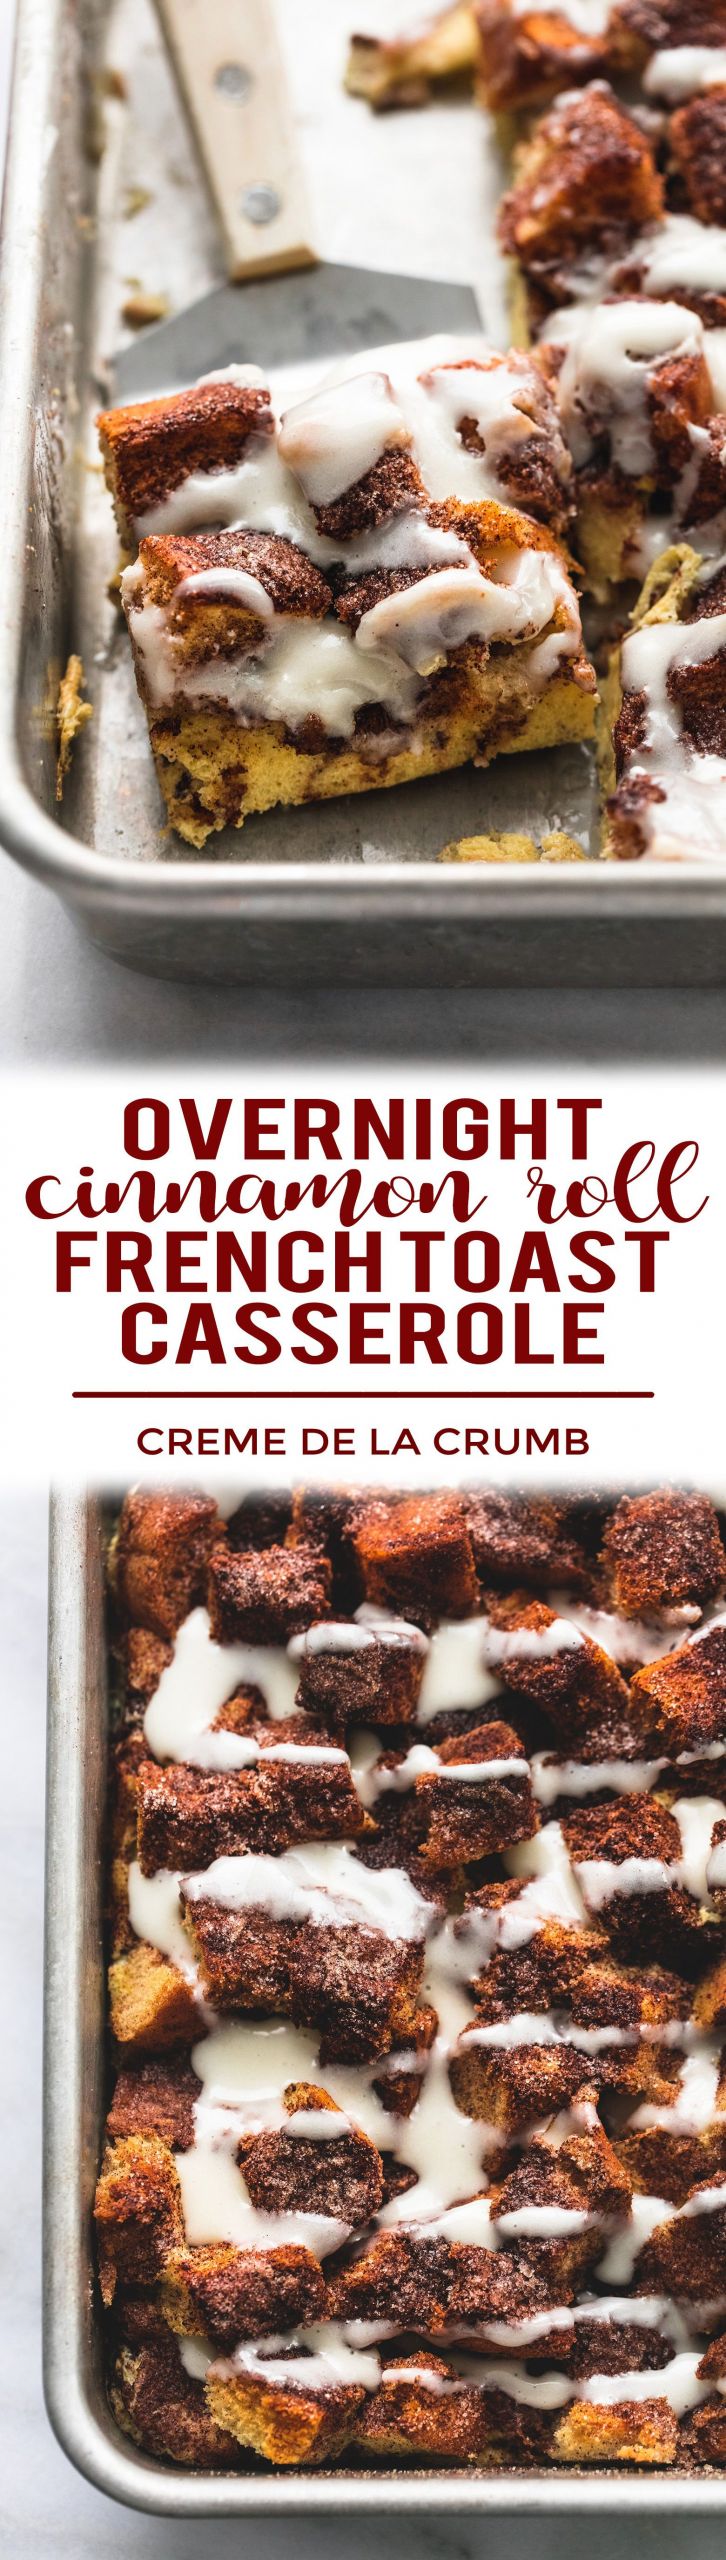 Overnight Cinnamon Roll French Toast Casserole
 Easy oven baked Overnight Cinnamon Roll French Toast